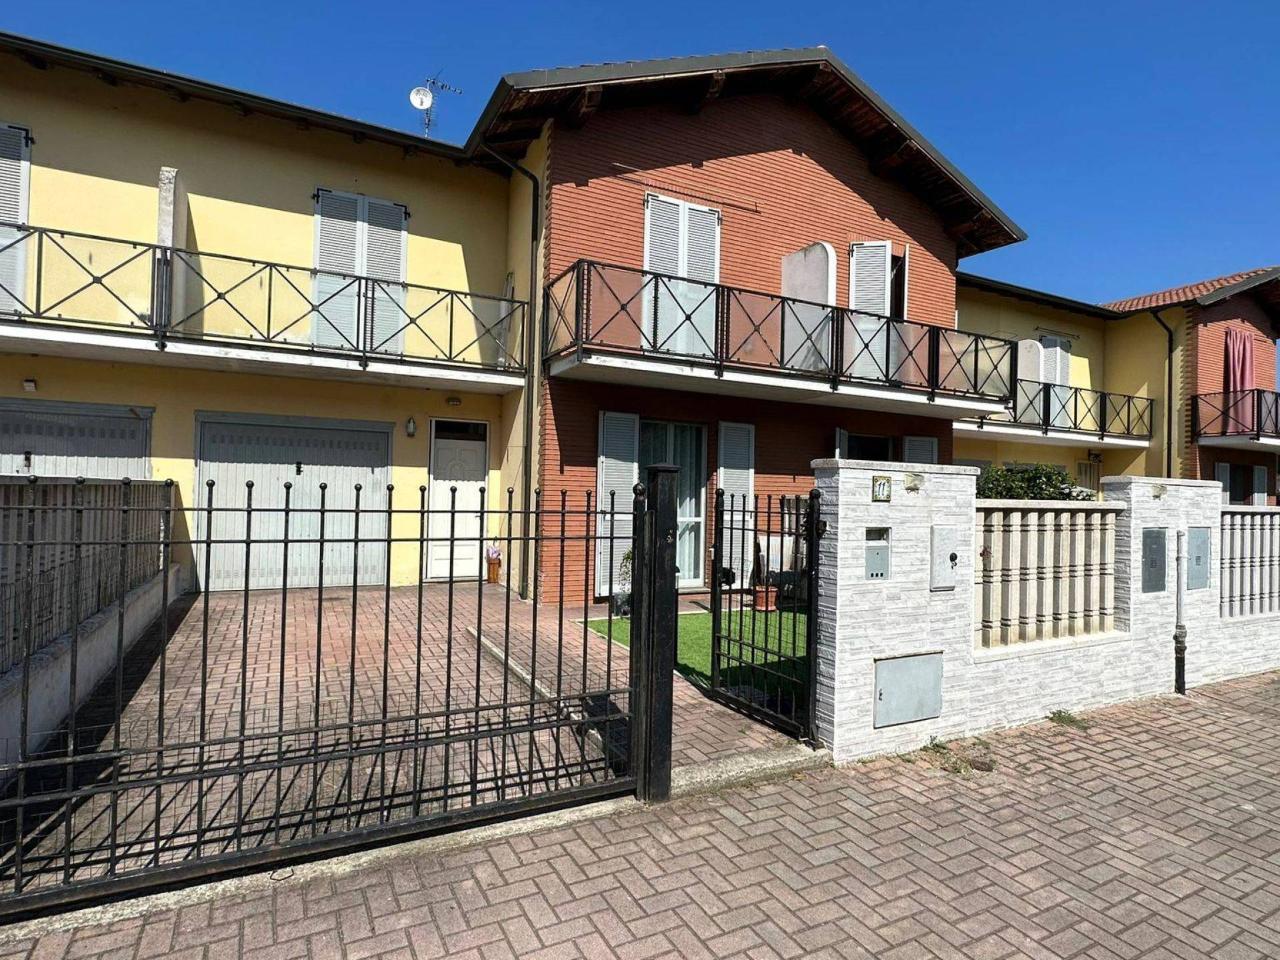 Villa a schiera in vendita a Garlasco